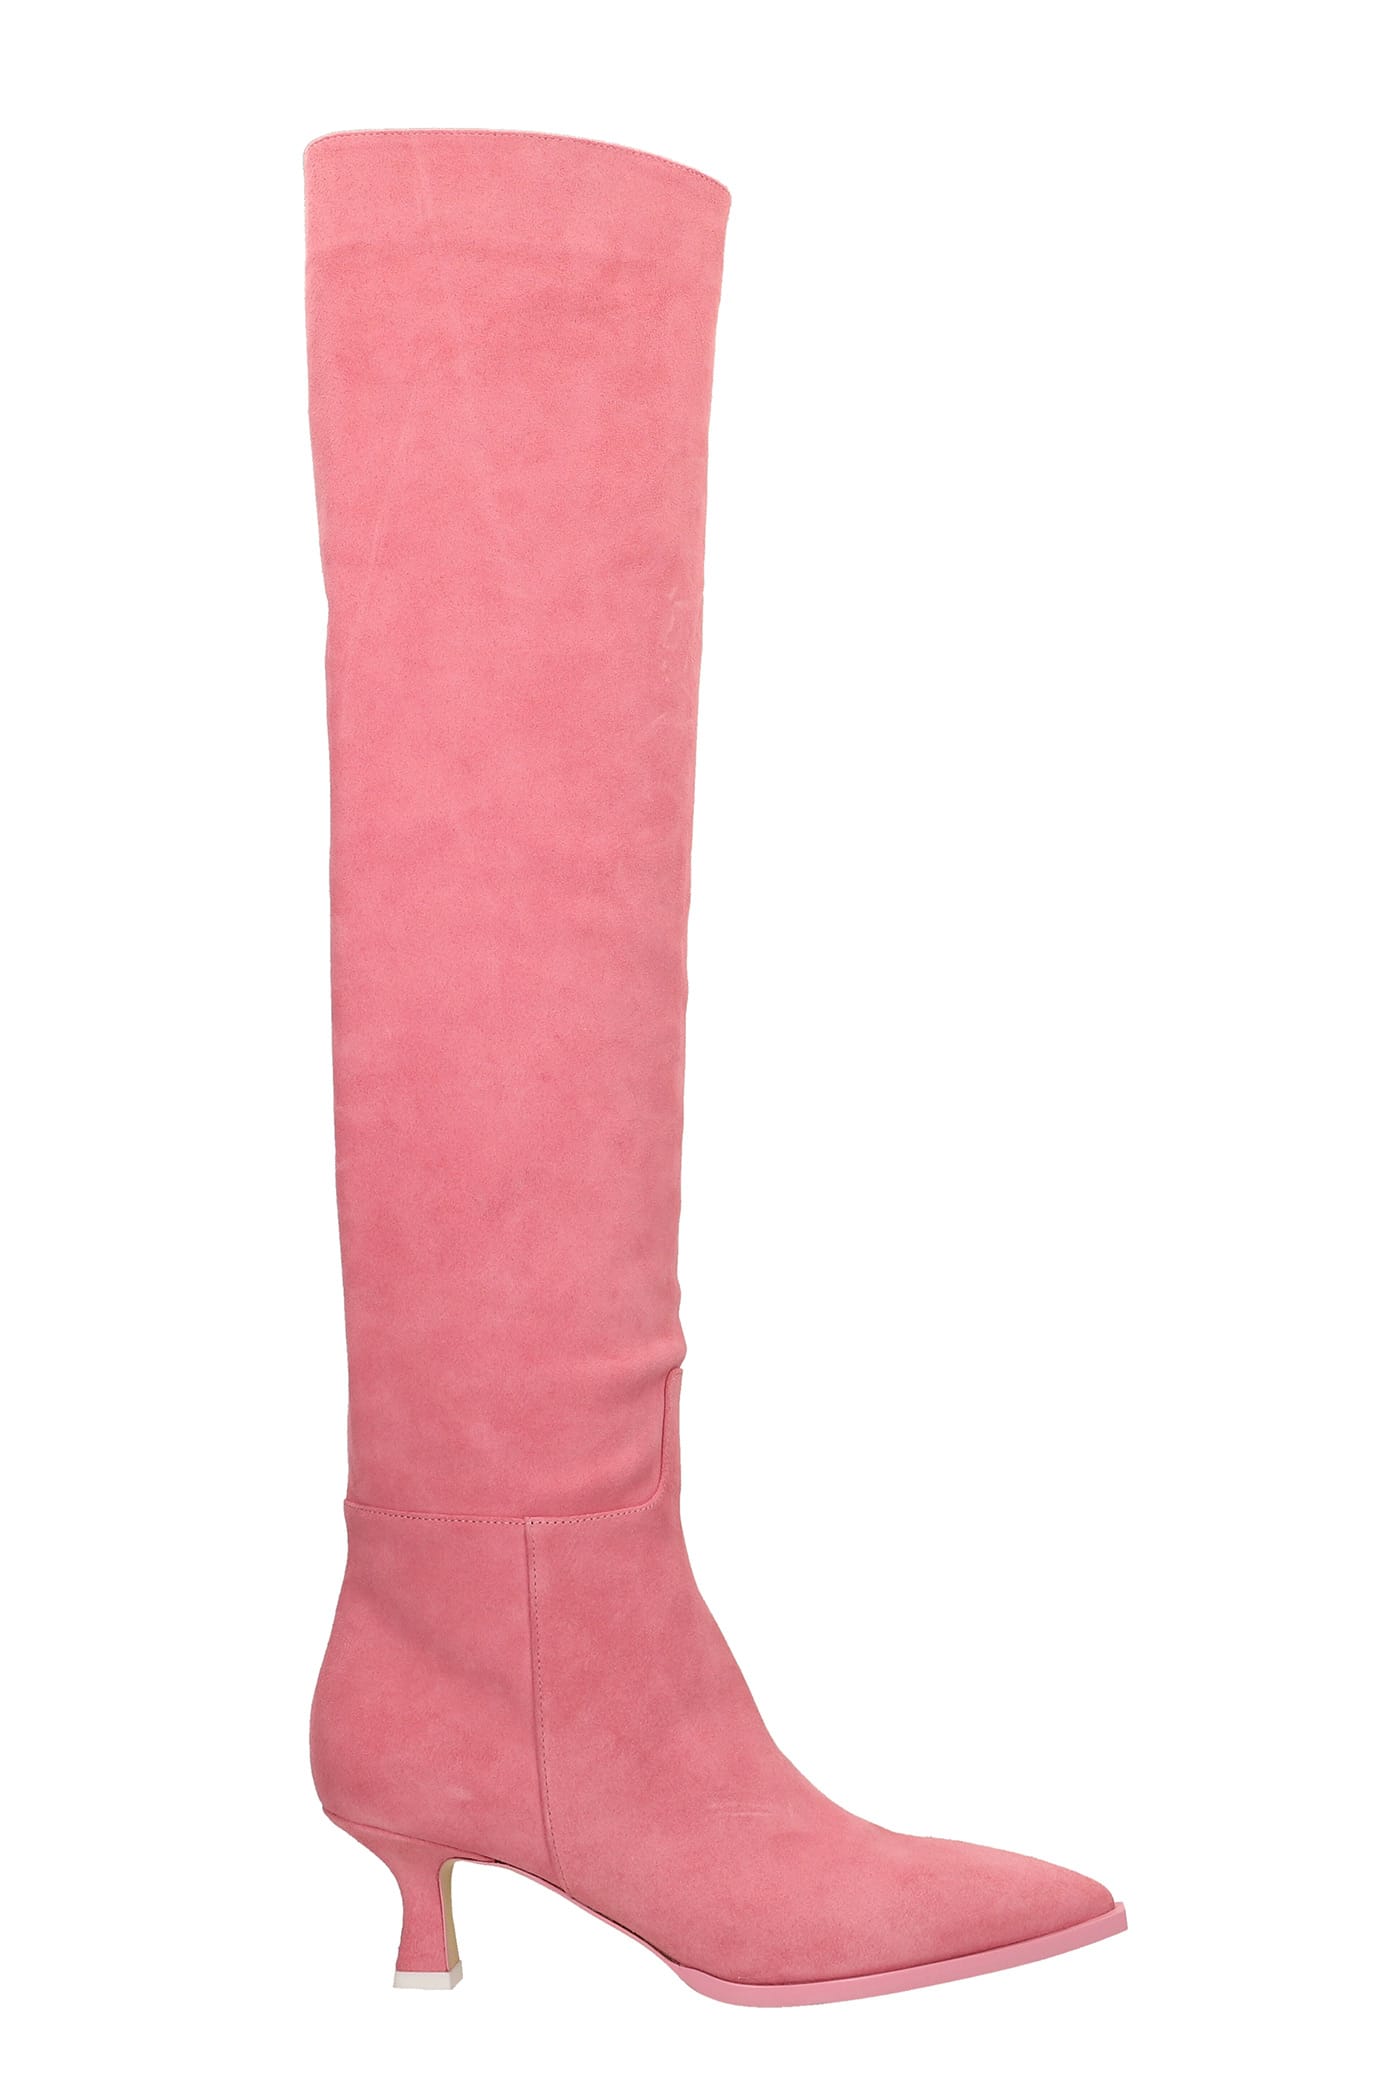 3JUIN Bea-s 055 High Heels Boots In Rose-pink Suede